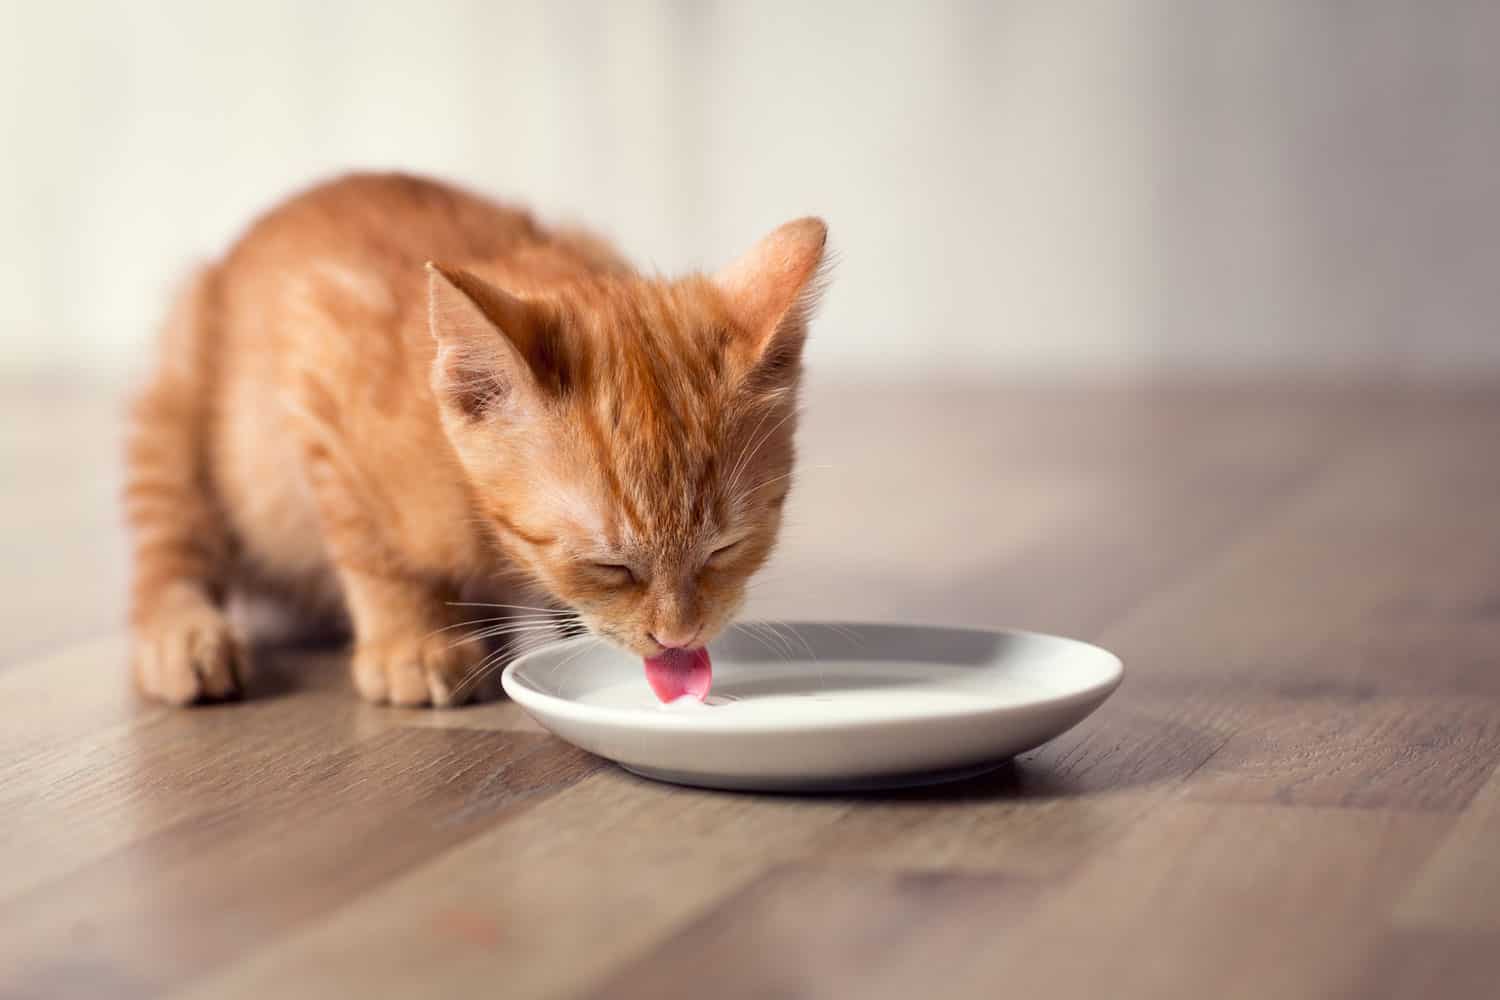 Ginger cat drinking cat milk